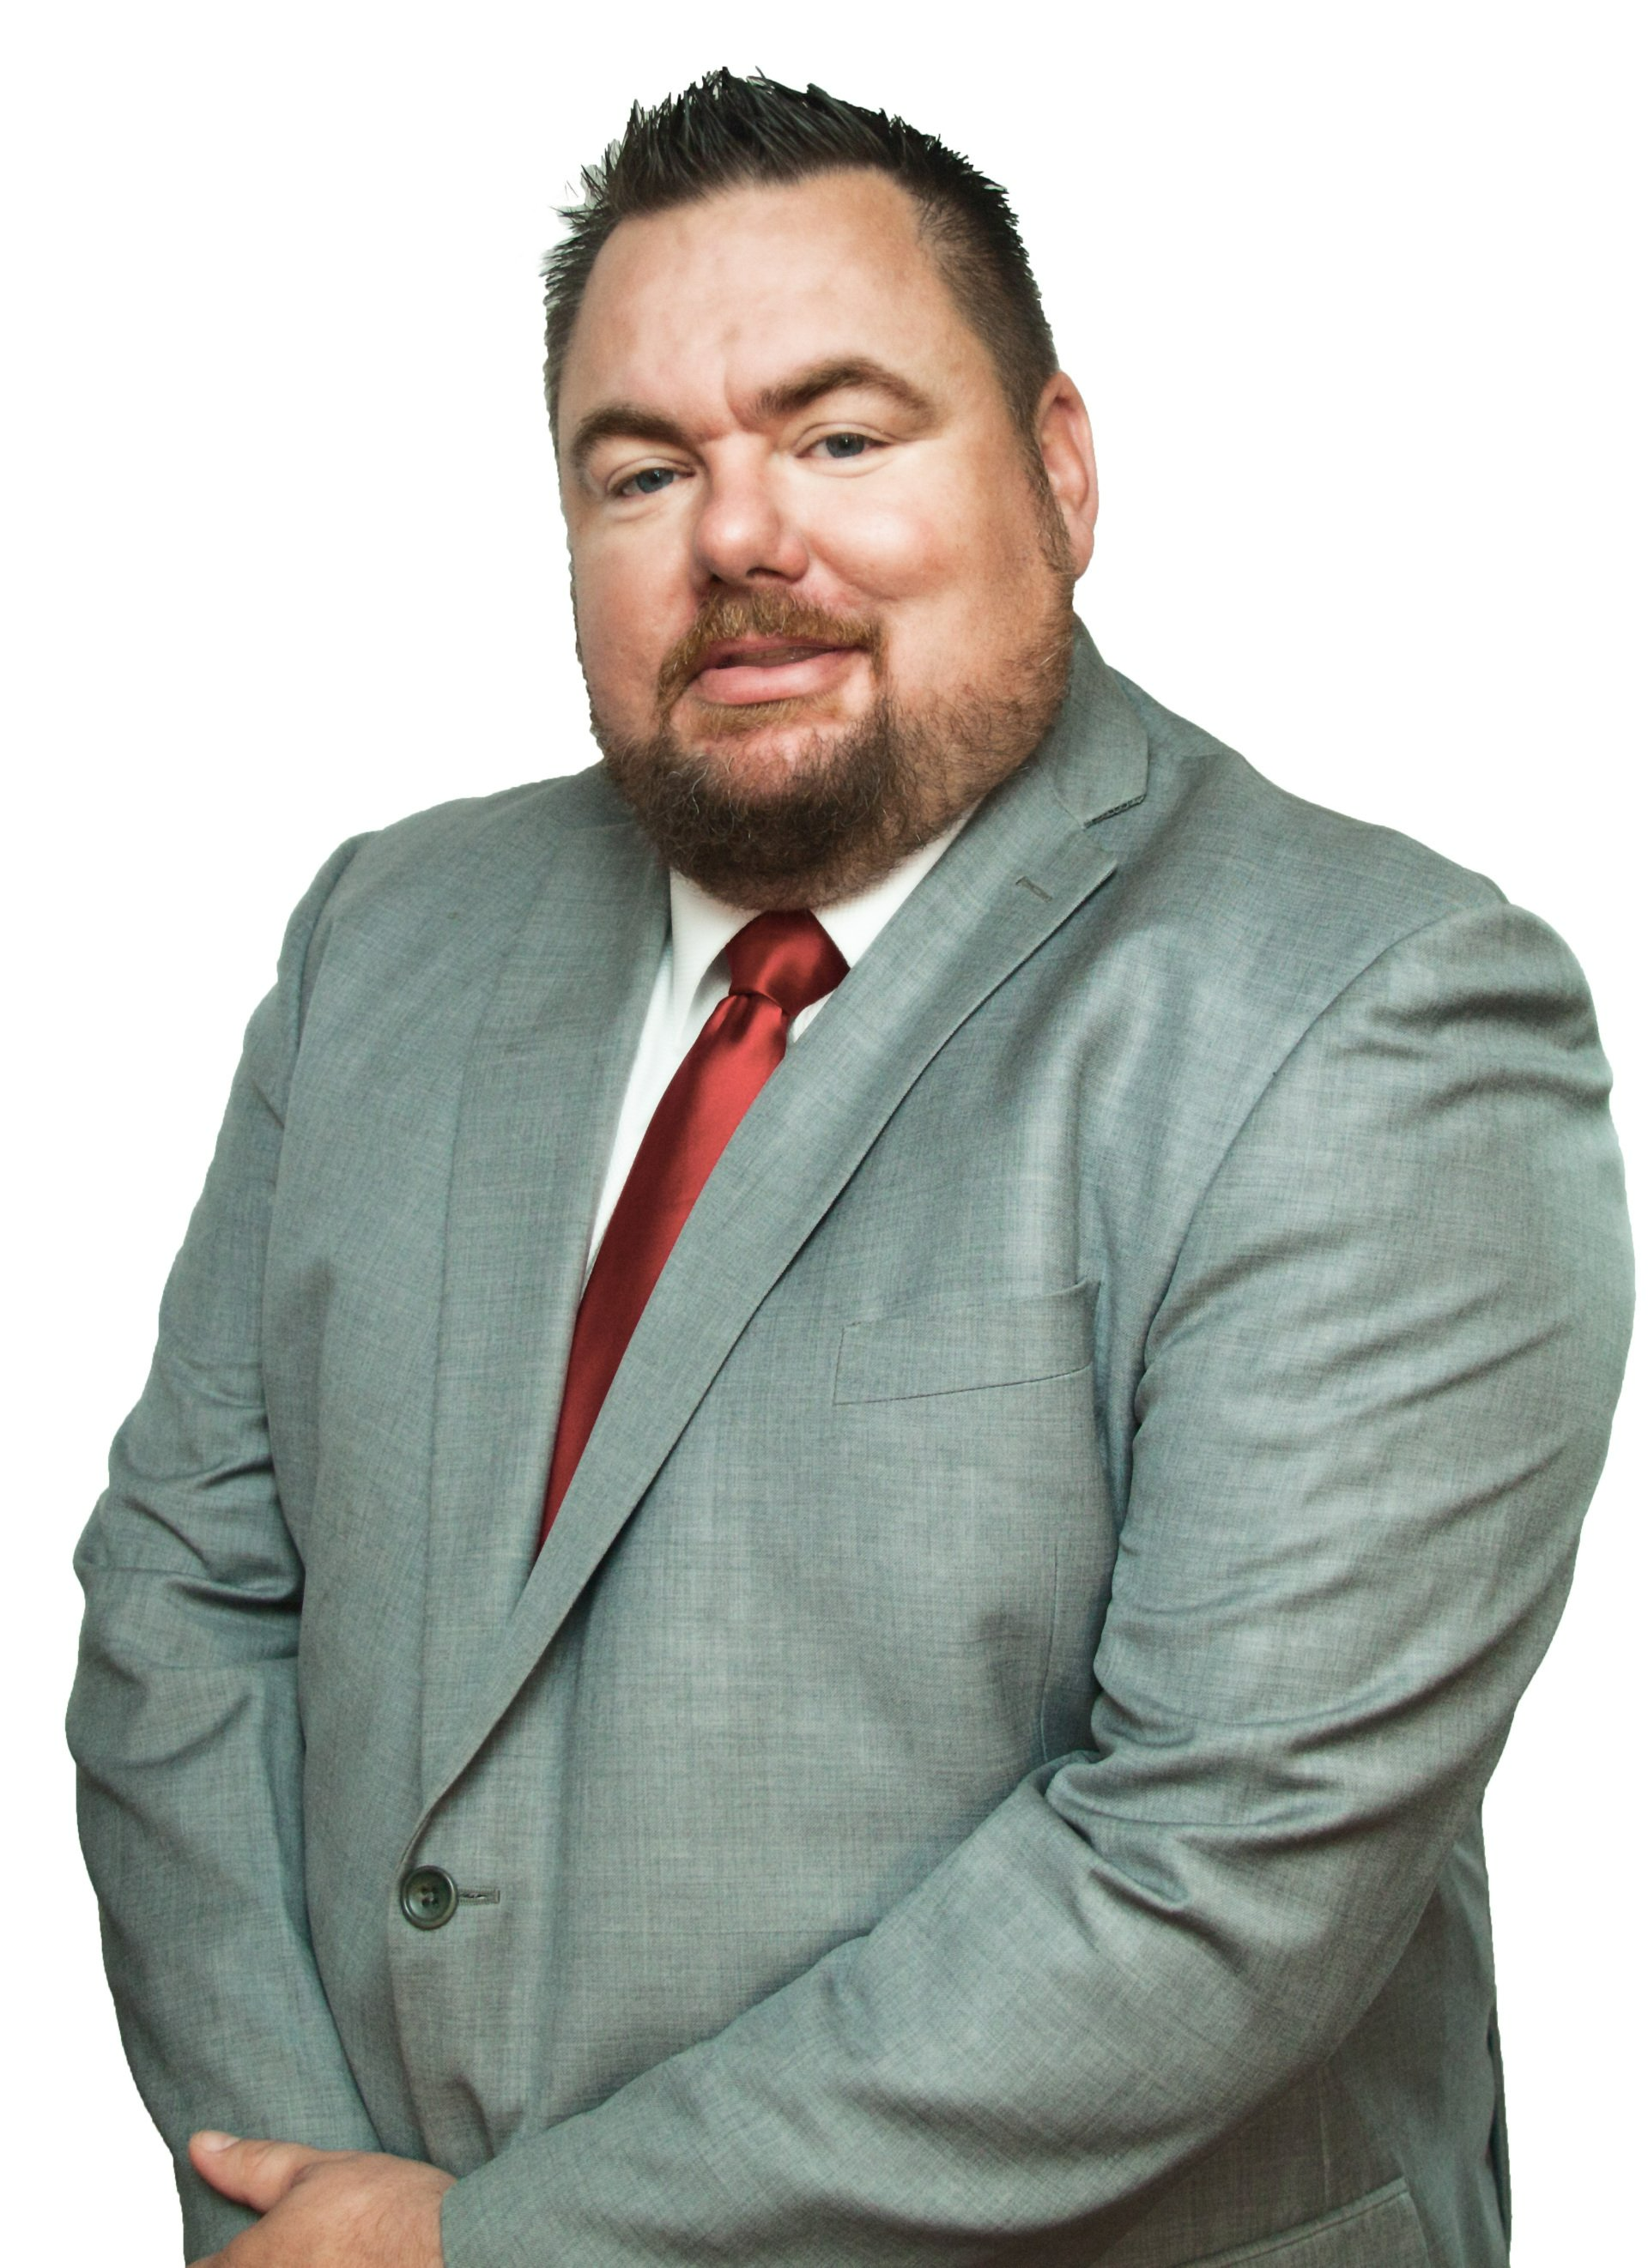 Atty. Robert Root III — General Practice Attorney in Niles, OH